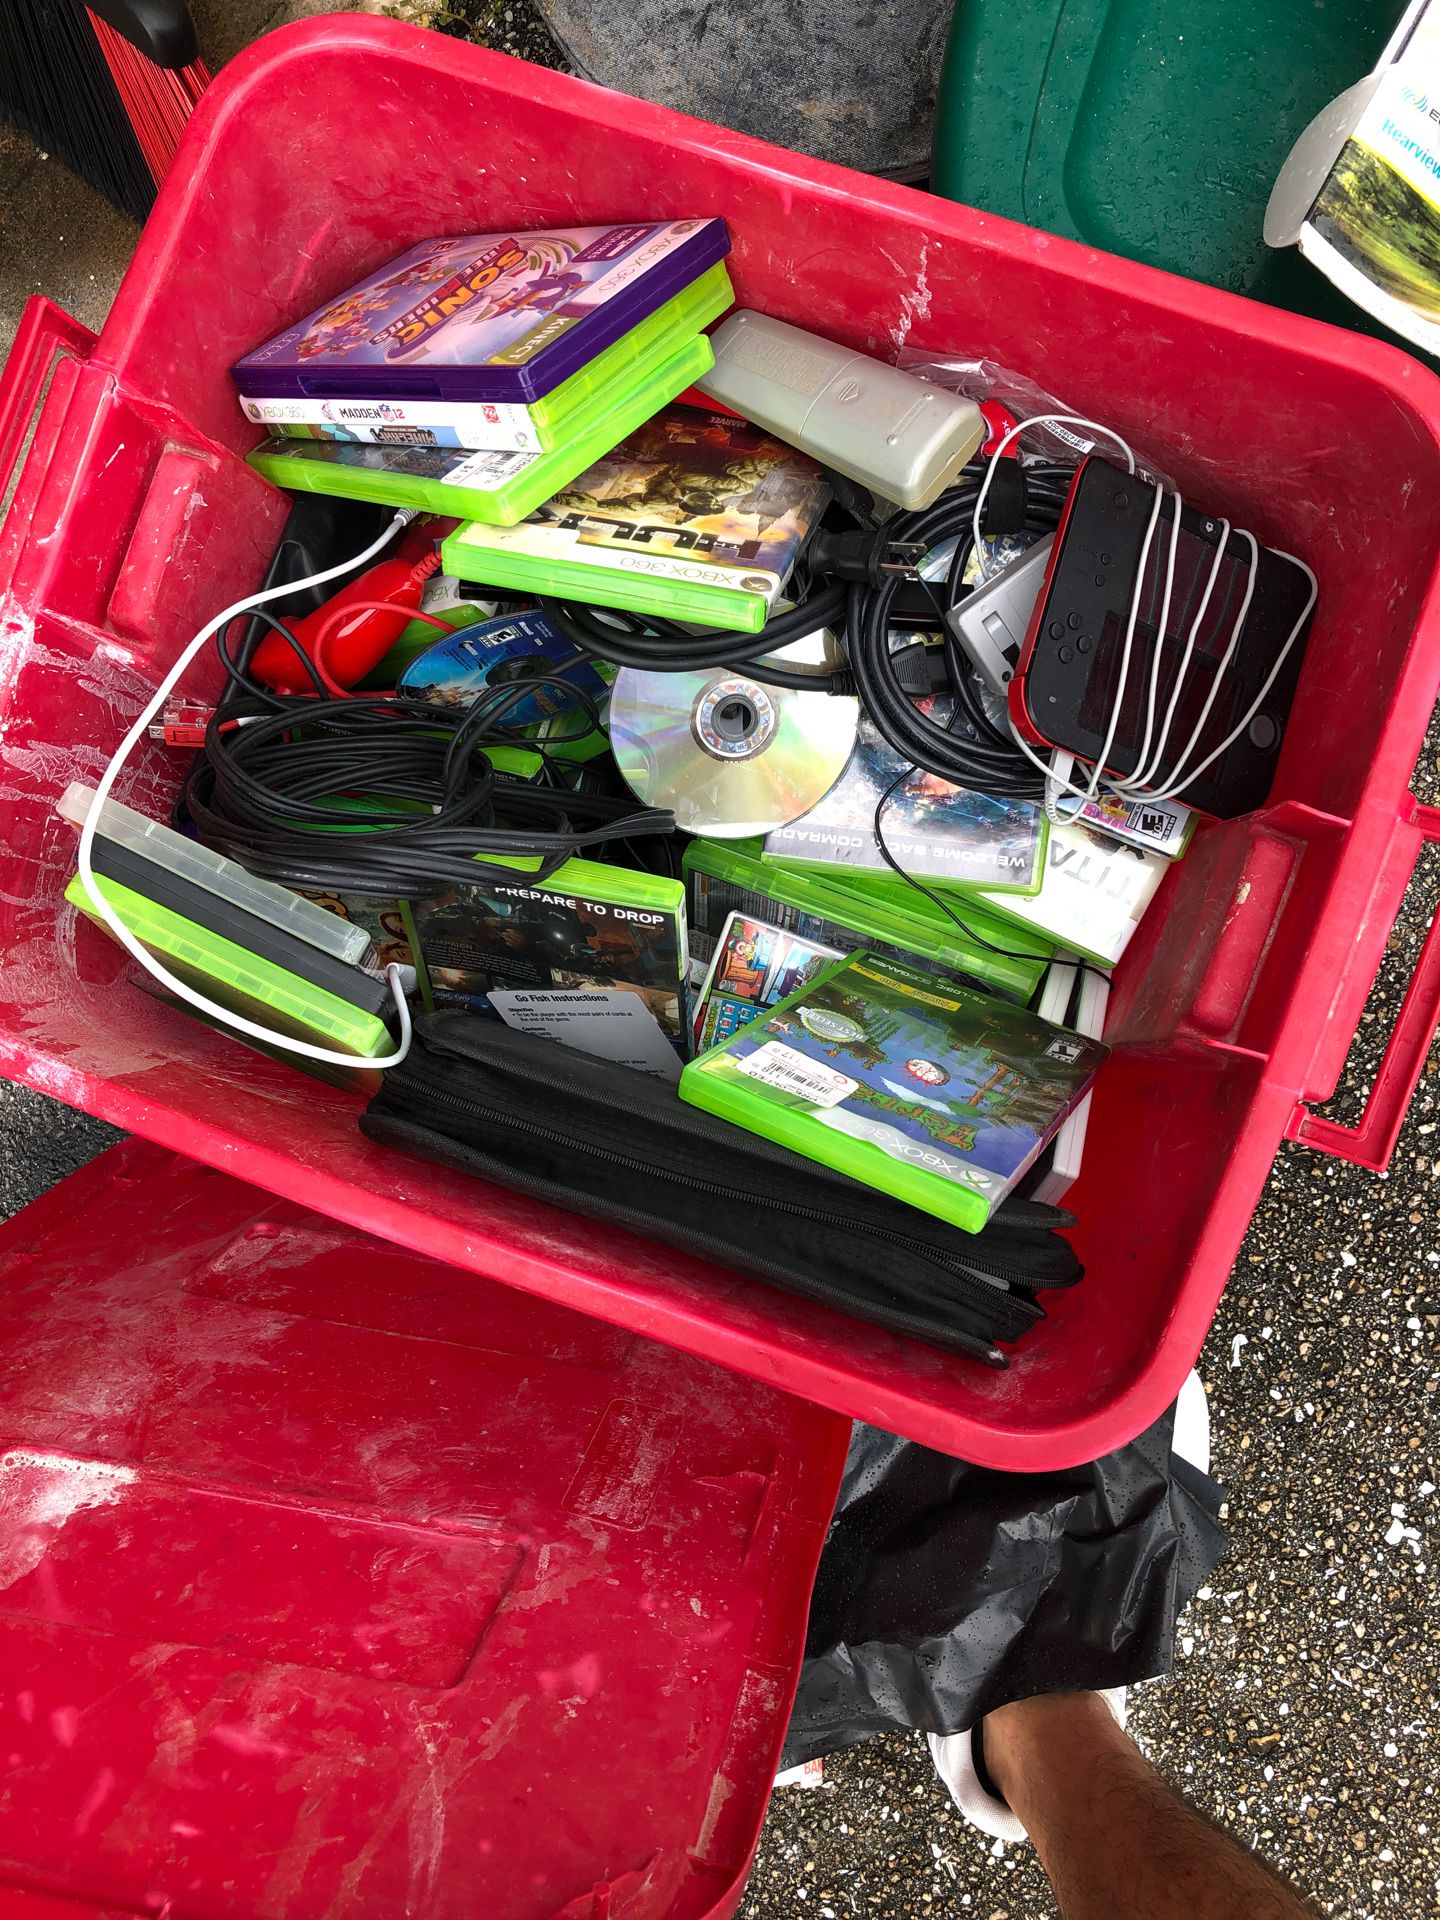 Whole bin full of XBOX games, console, accessories etc.